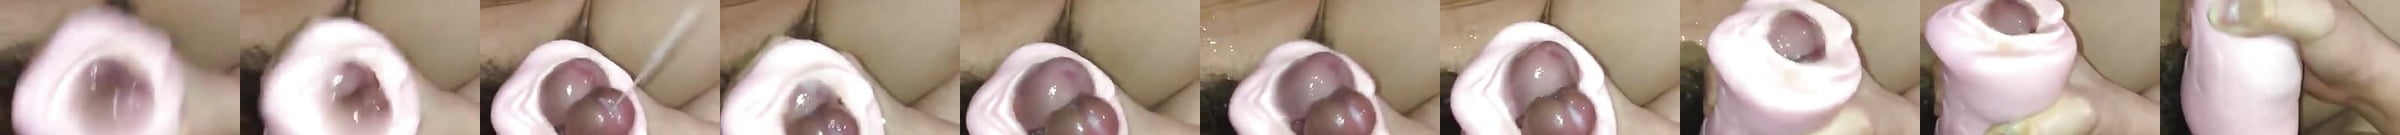 Rub Em Balls Free Gay Balls Hd Porn Video 39 Xhamster